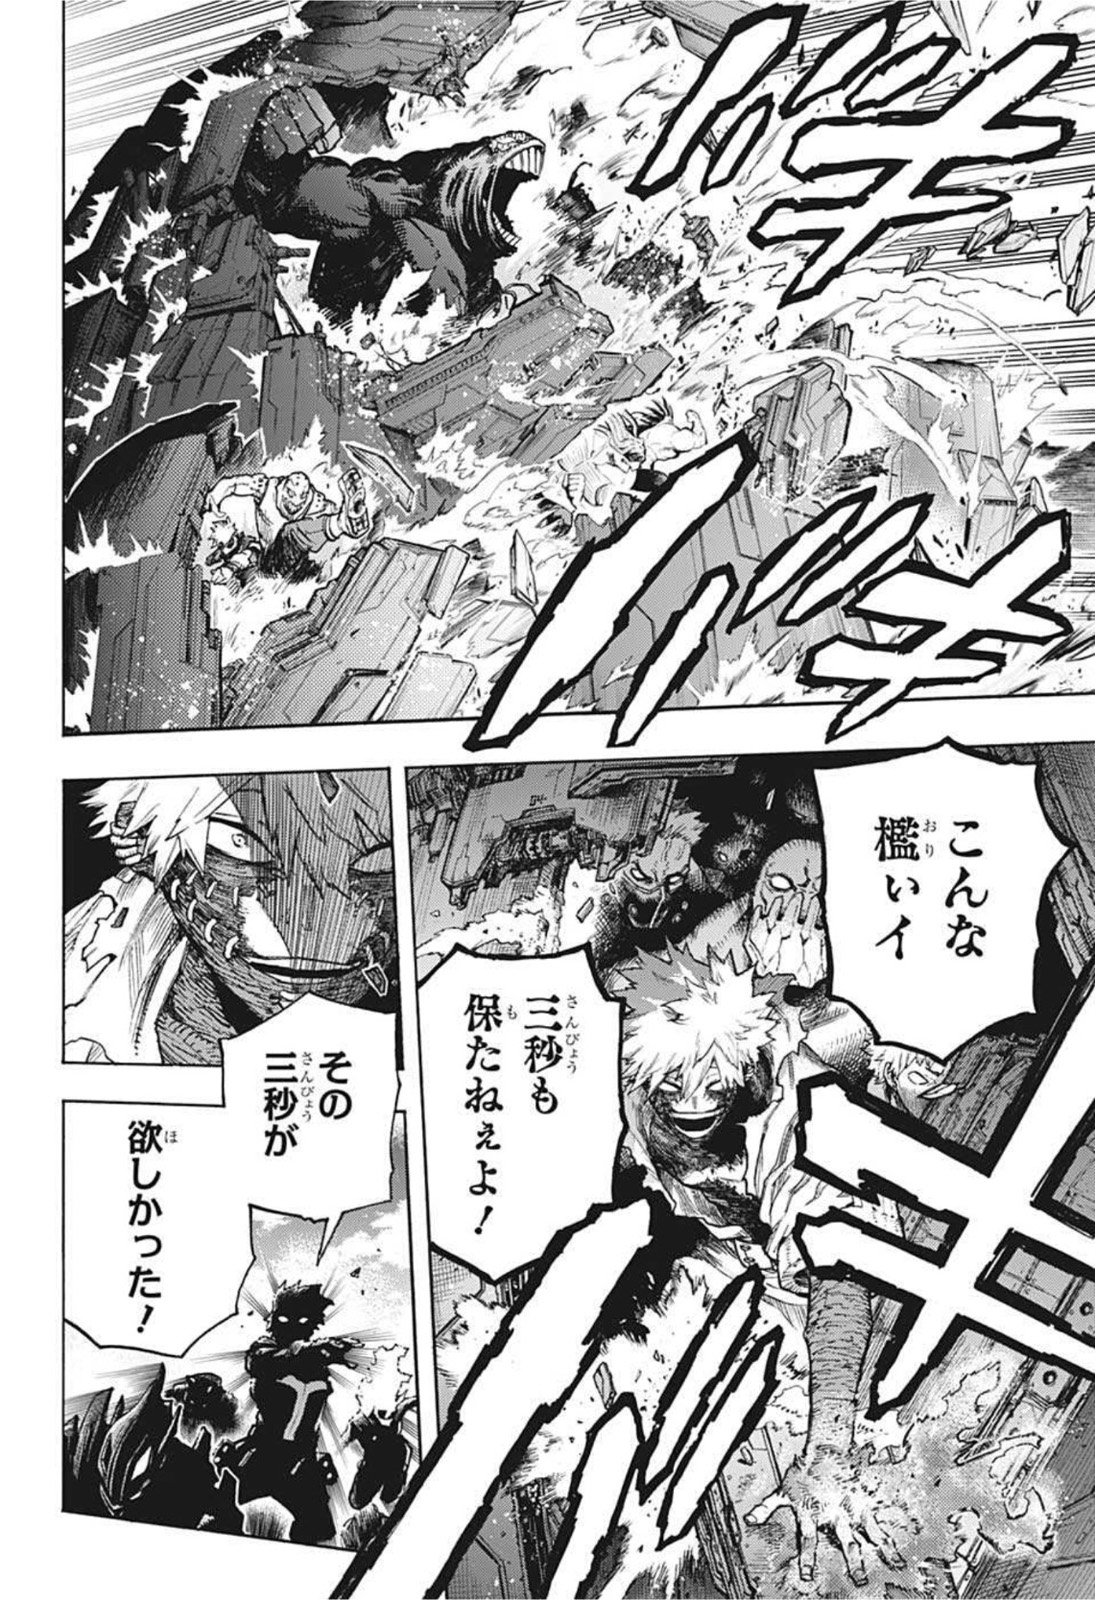 Boku no Hero Academia - Chapter 345 - Page 2